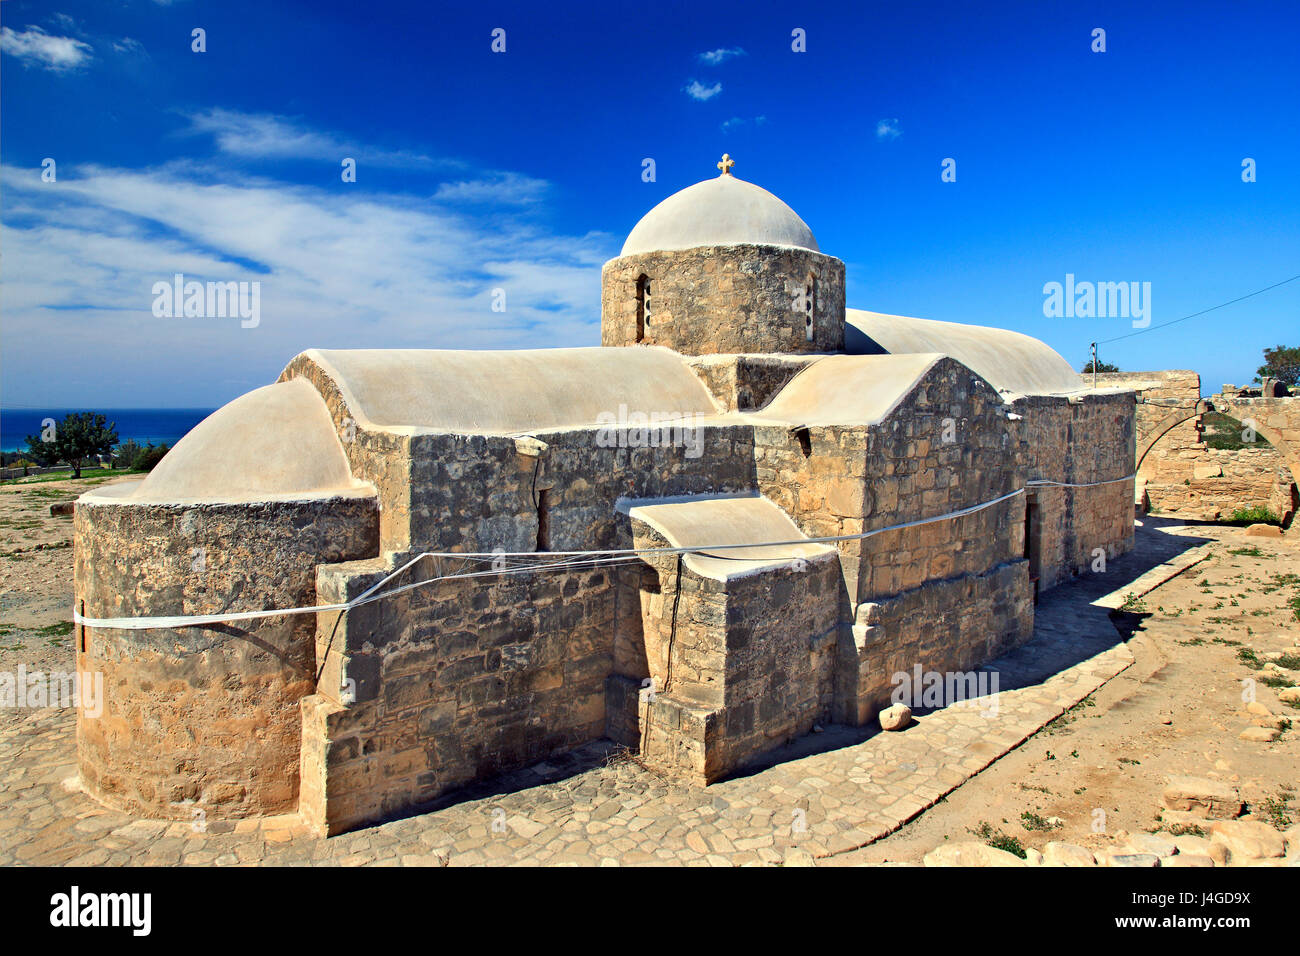 La chiesa bizantina di panagia katholiki accanto al sito archeologico di palaipaphos, a kouklia village, distretto di Paphos, Cipro isola. Foto Stock